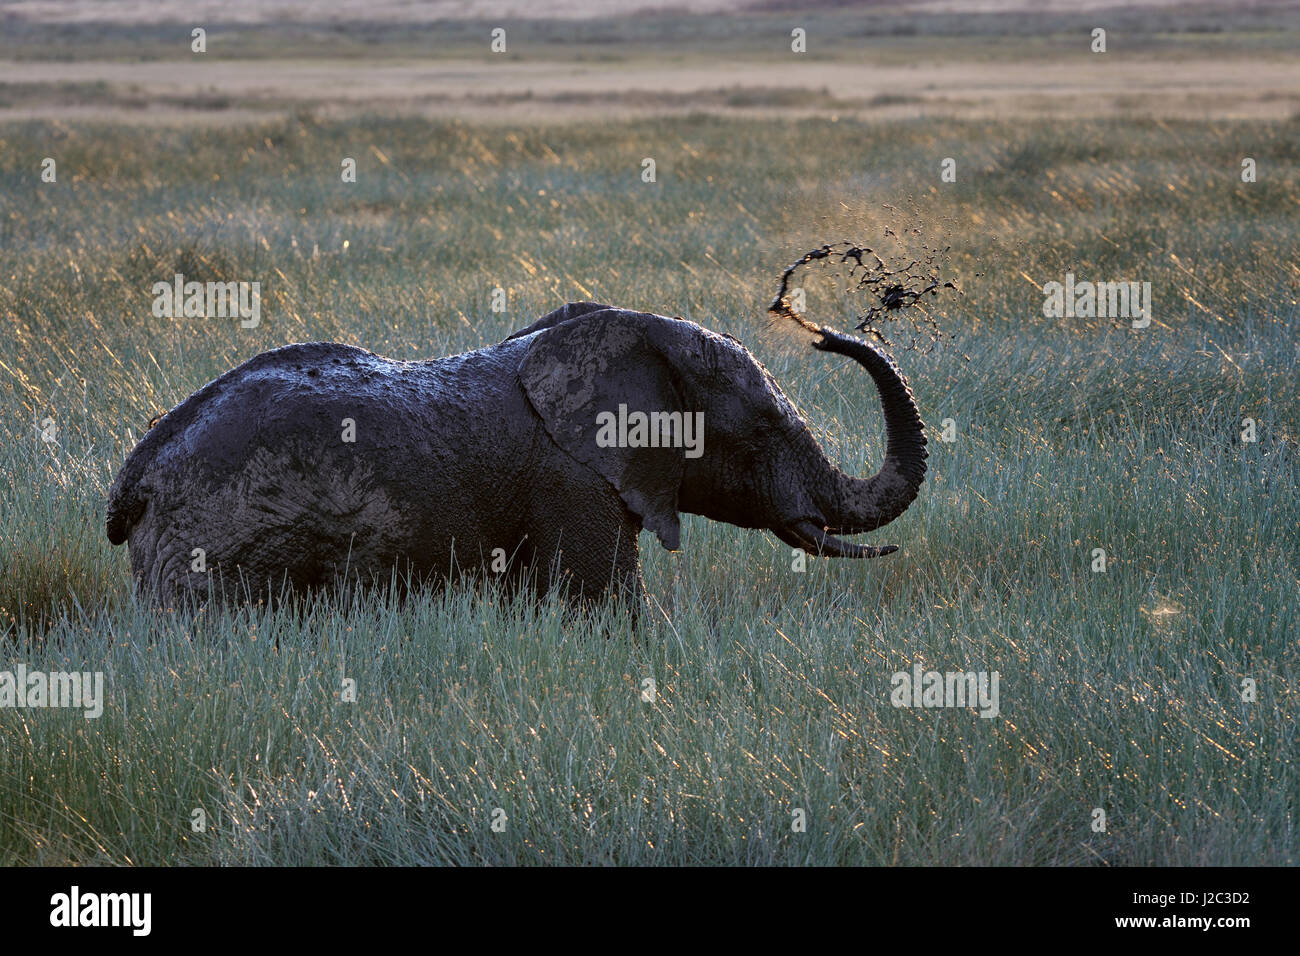 African Elephant (Loxodonta africana) splashing in swamp, throwing mud, backlit, Serengeti National Park, Tanzania. Stock Photo